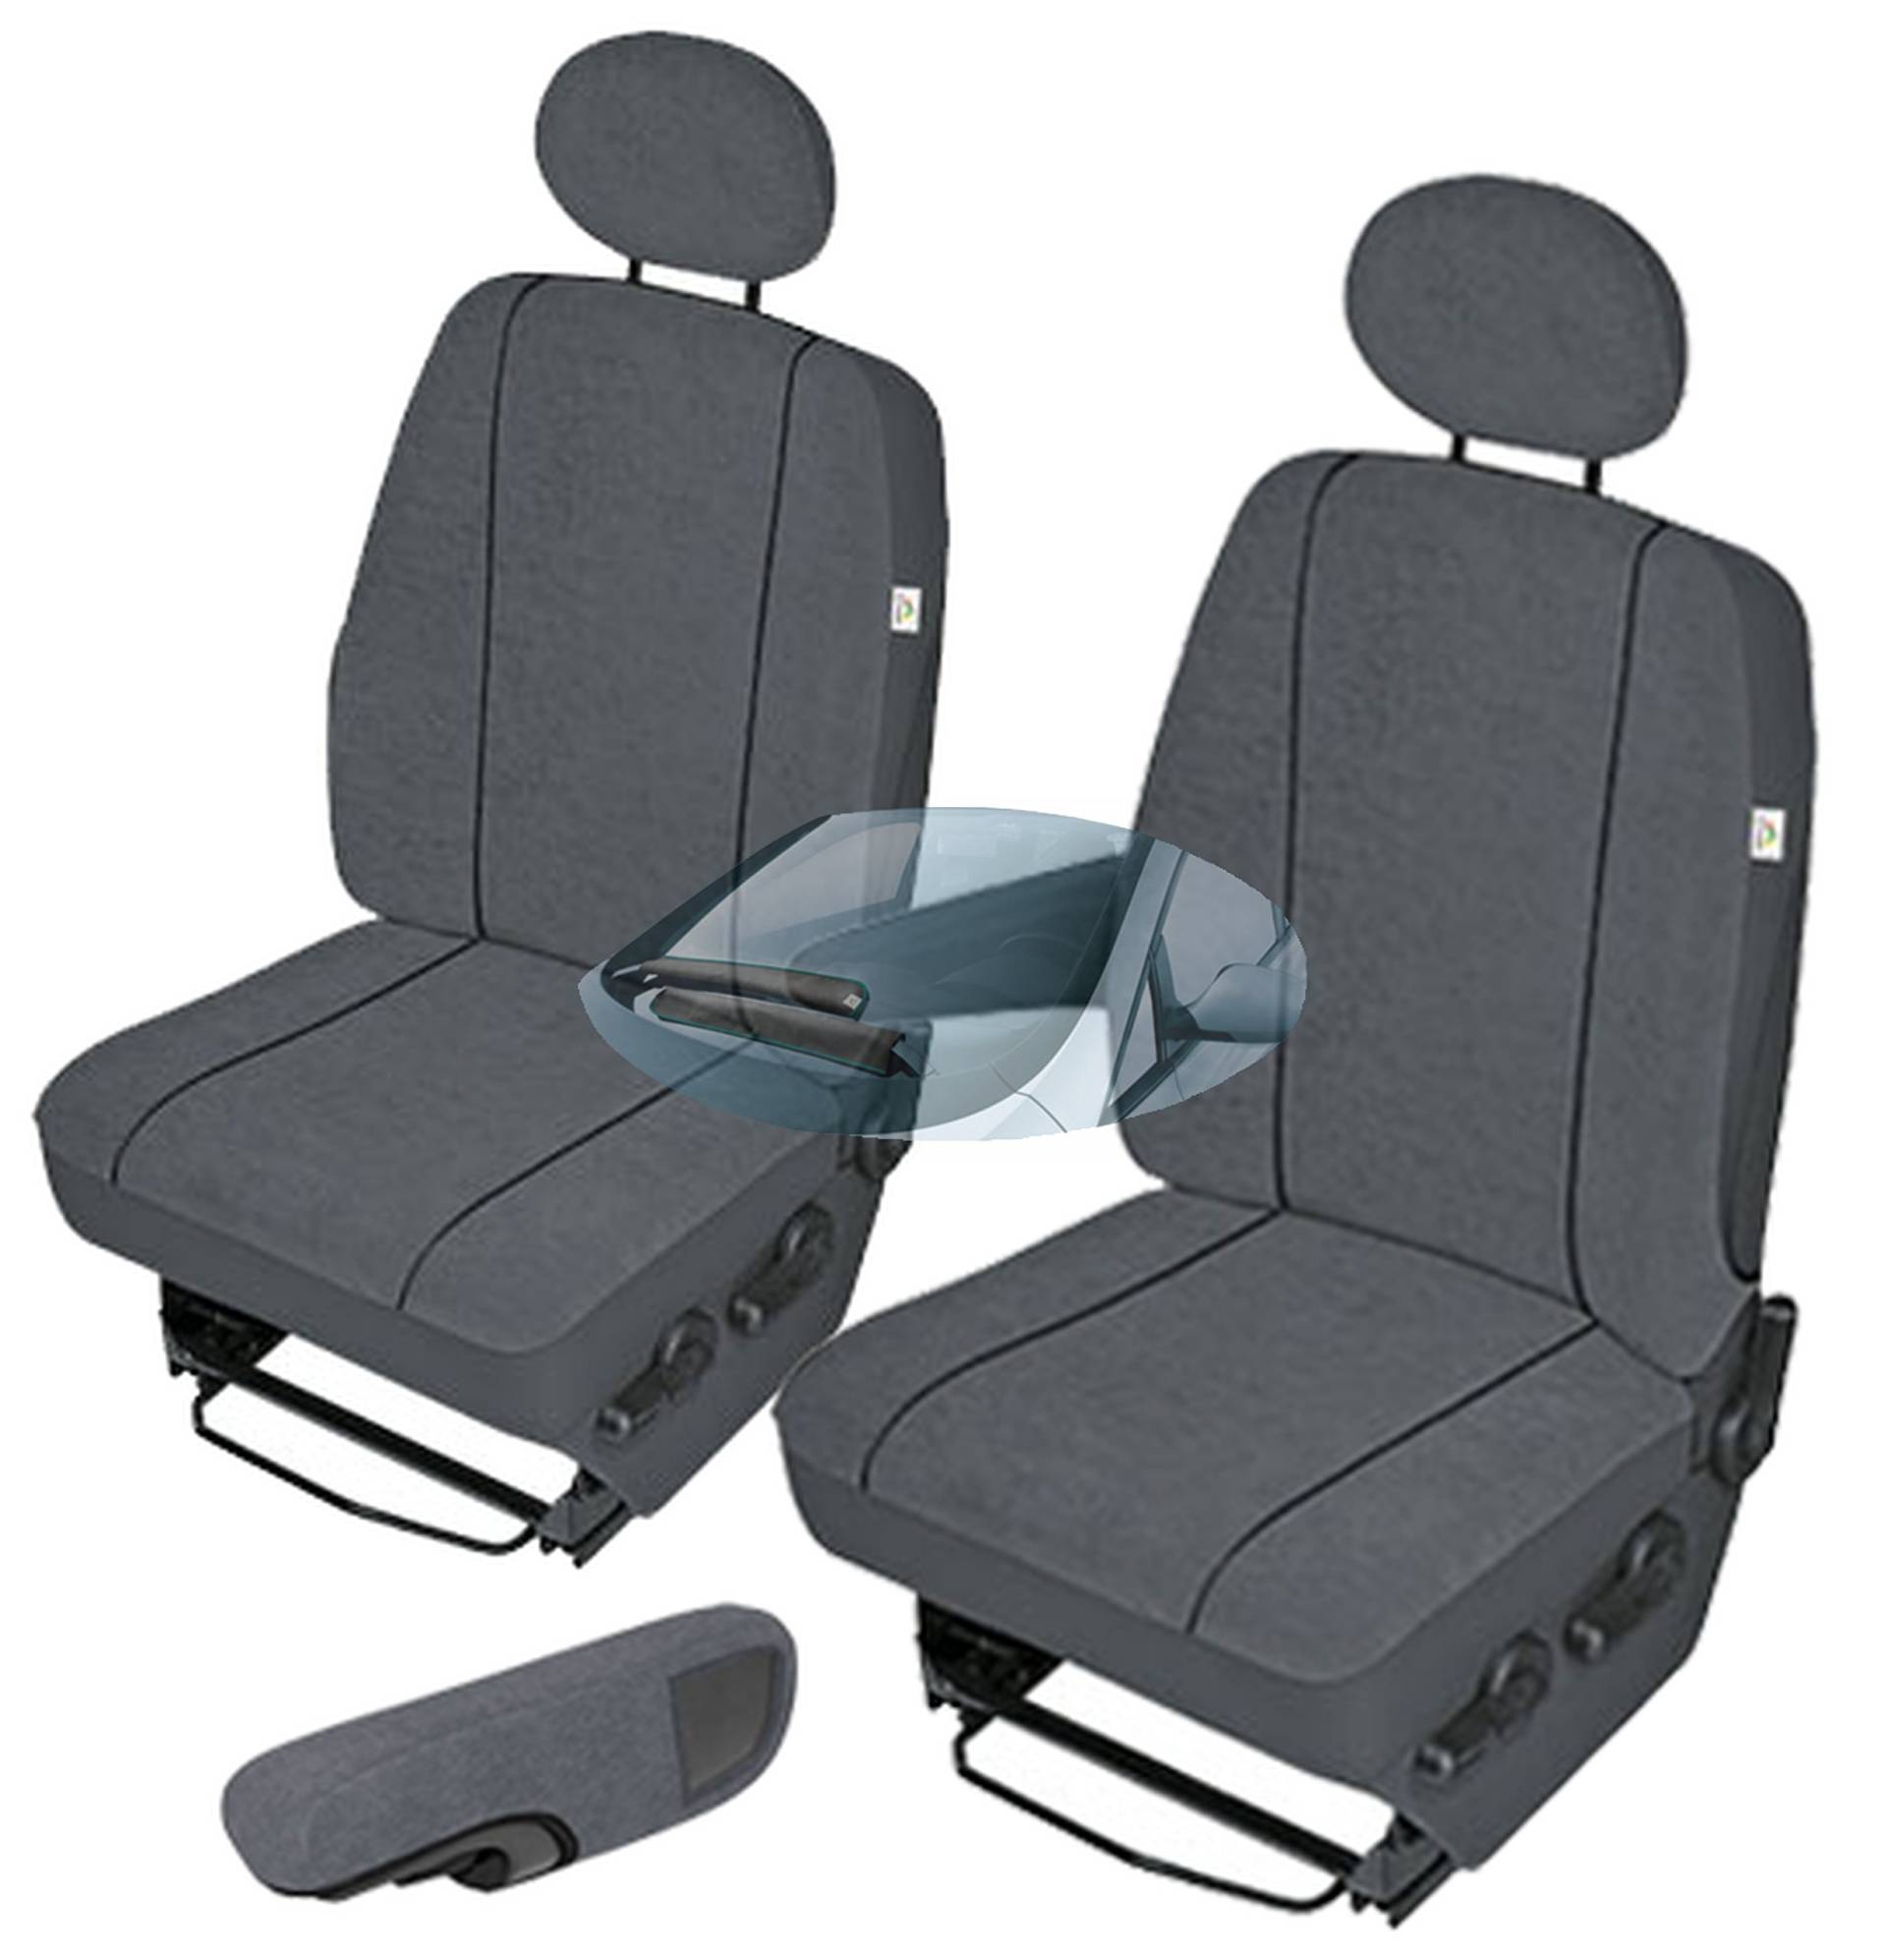 ZentimeX Z752432 Sitzbezüge Set Fahrersitz/Einzelsitz Armlehne rechts + Beifahrersitz/Einzelsitz ohne Armlehnen + Armlehne (Fahrersitz) Stoff dunkel grau von ZentimeX